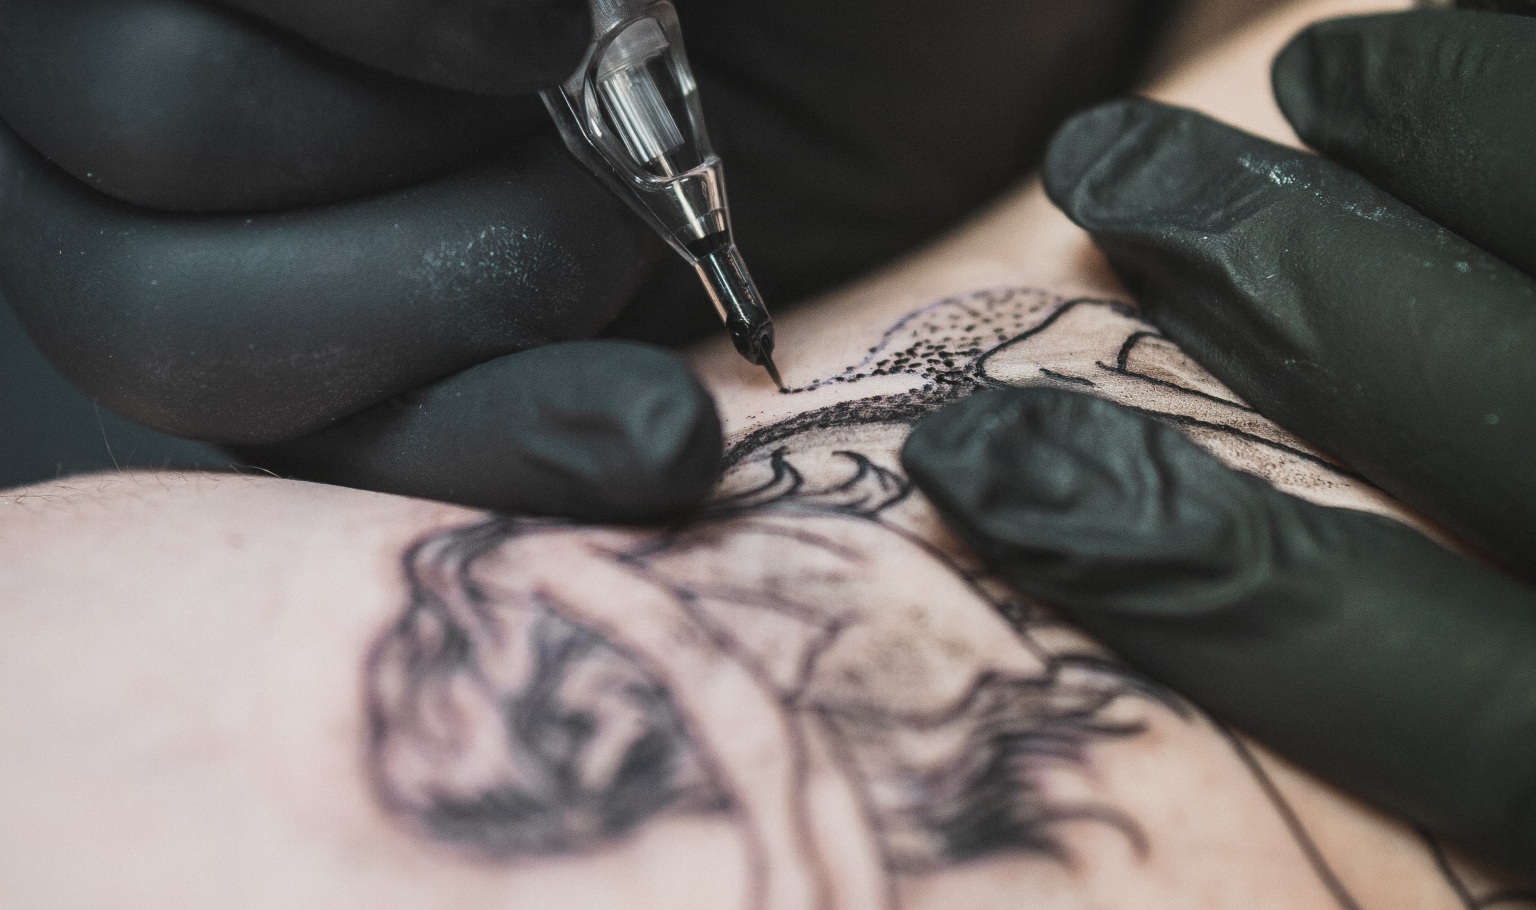 A closeup of an arm getting a tattoo.